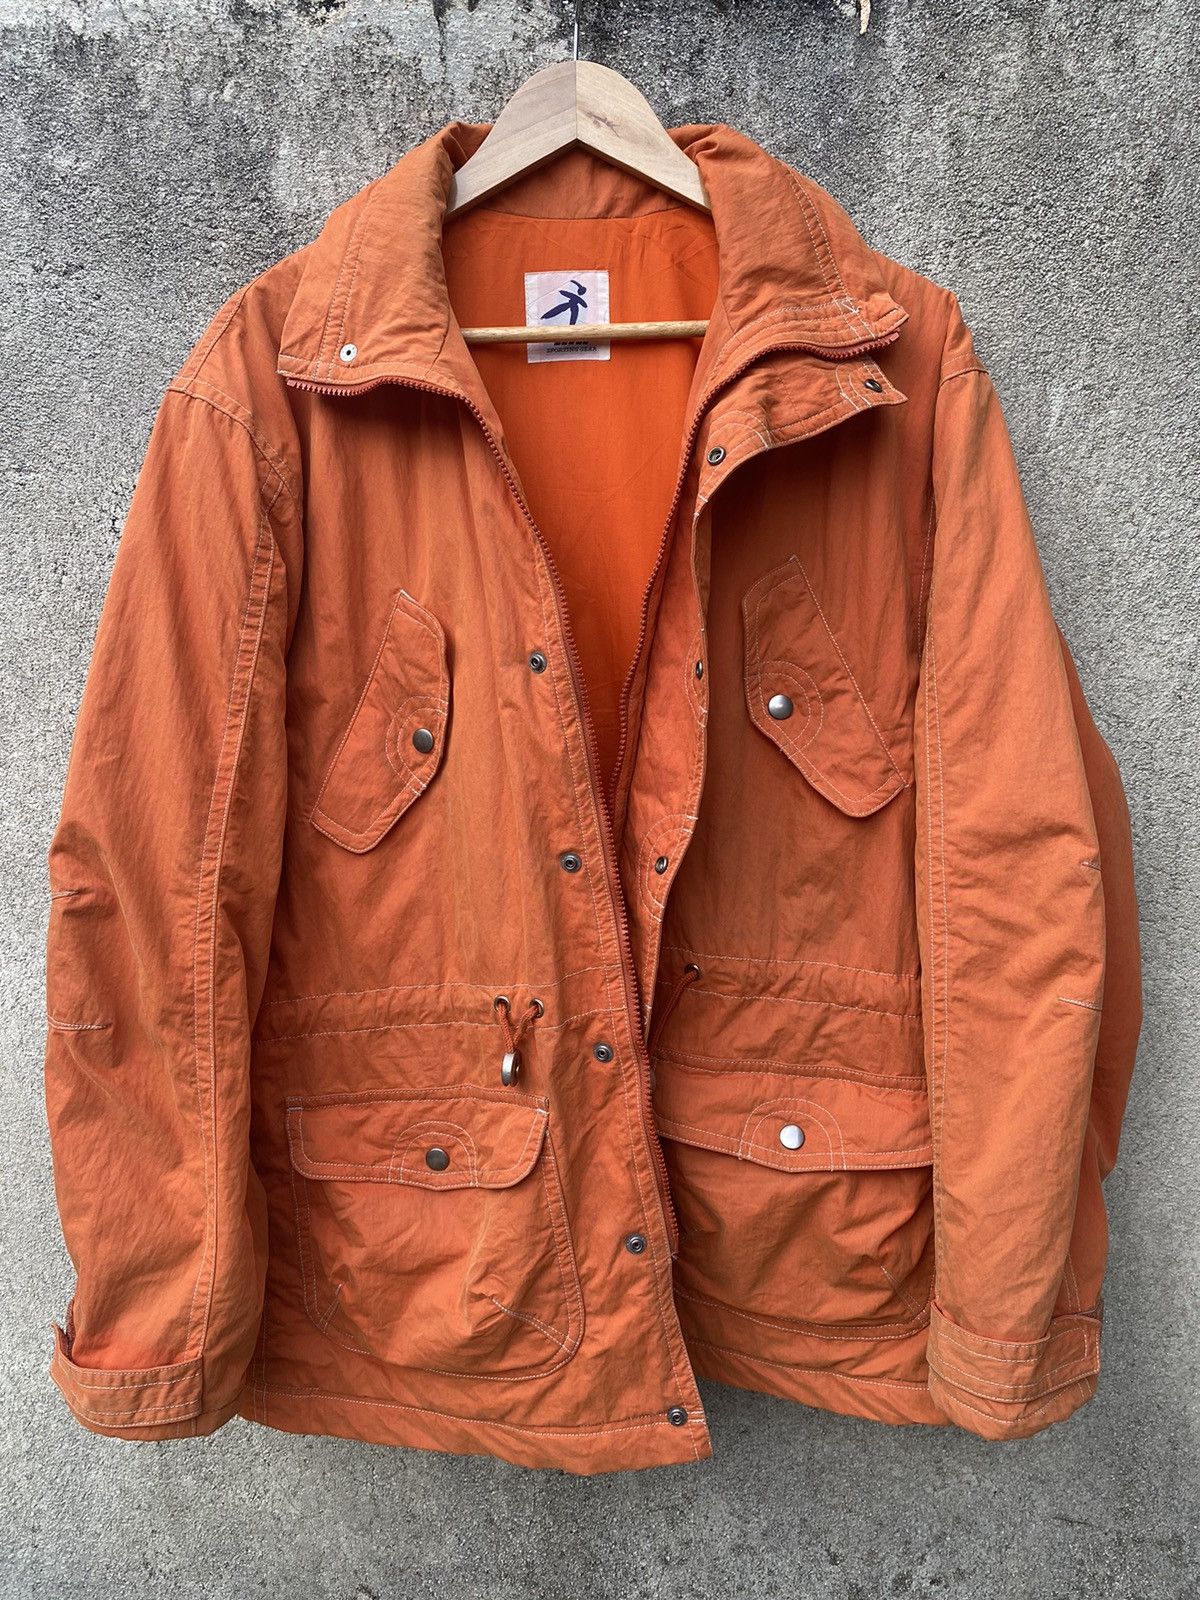 Issey Miyake - Vintage Hai Sporting Gear Parka Jacket Orange Colour - 3